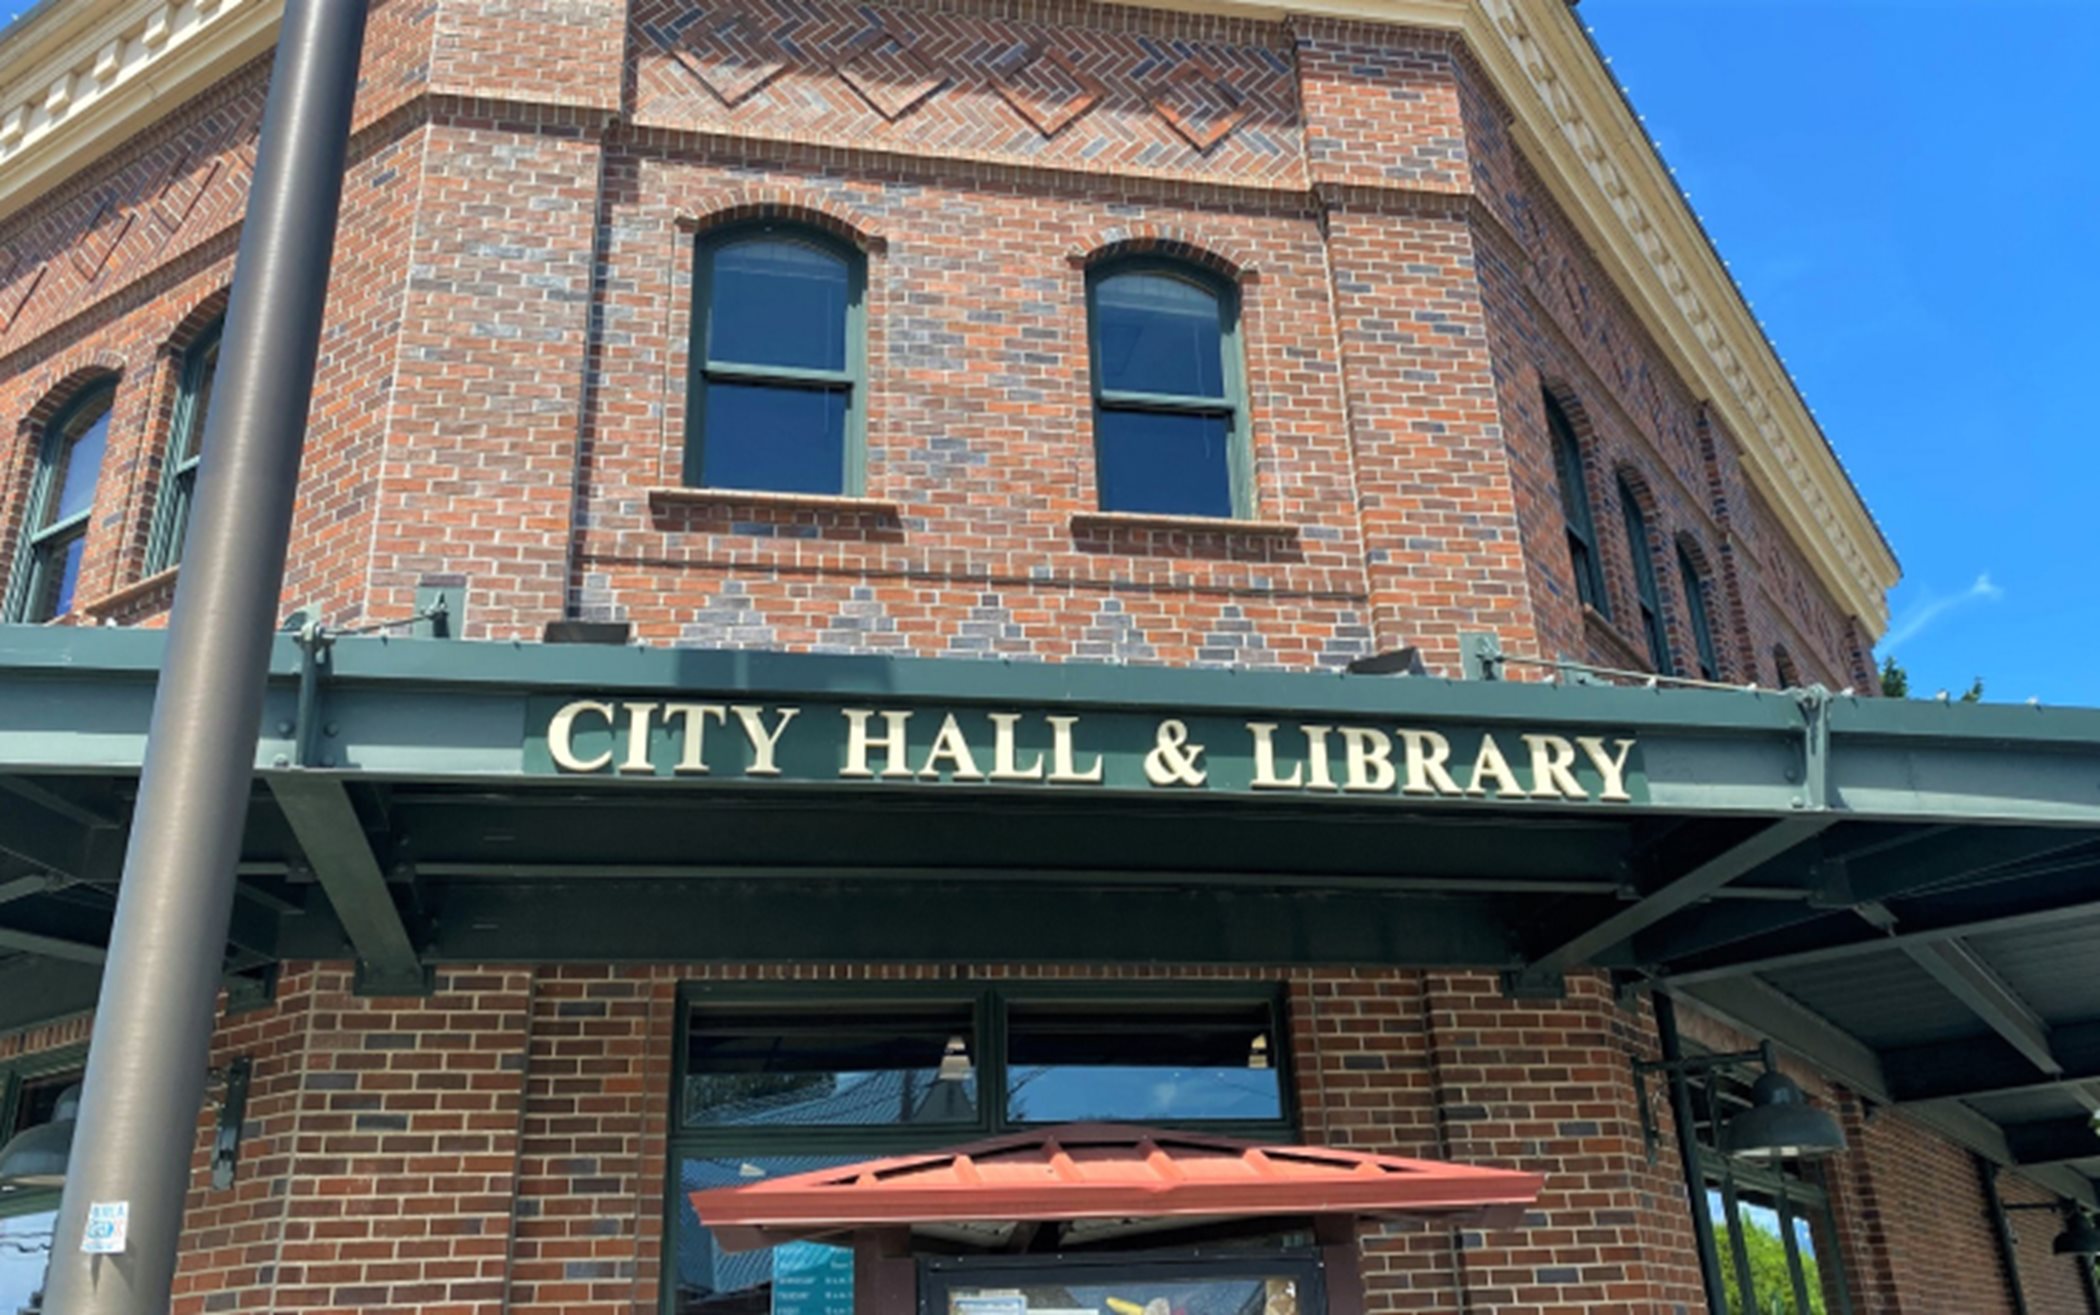 City Hall & Library exterior